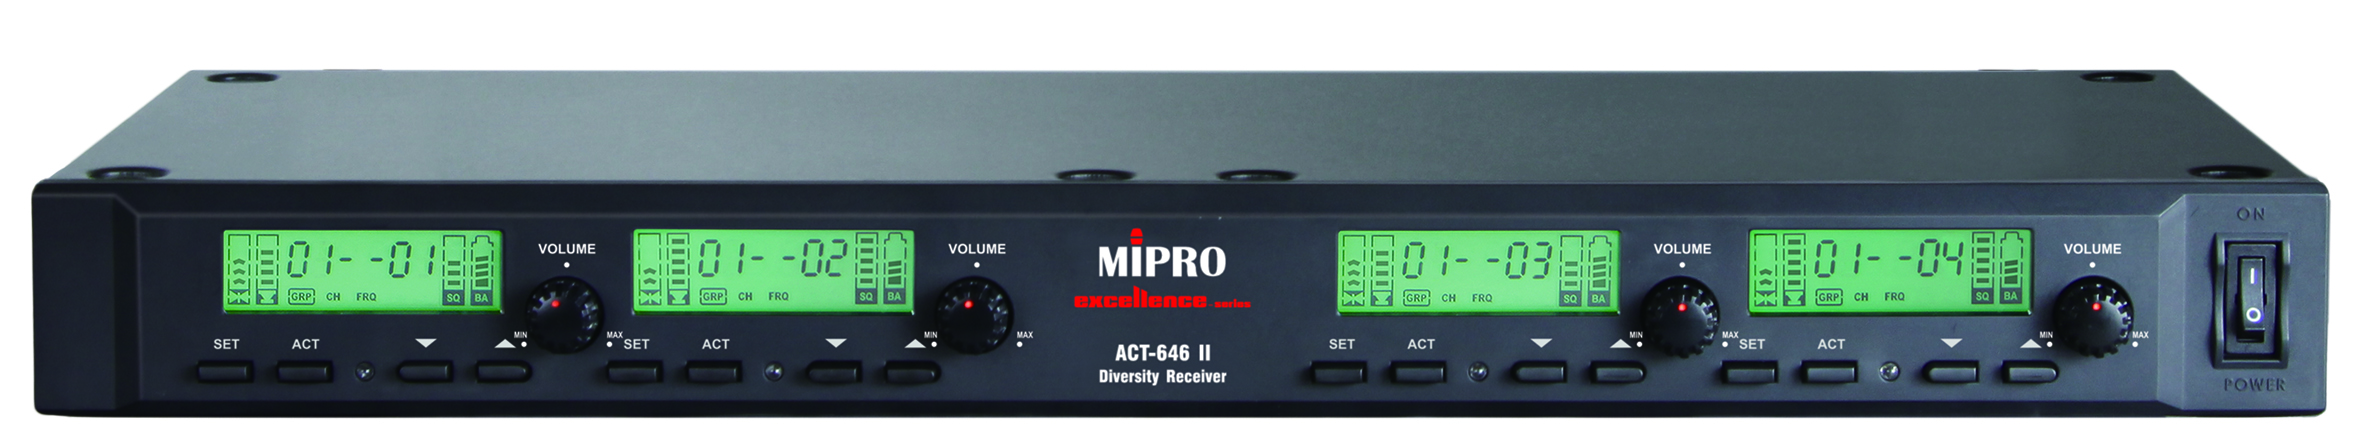 【MIPRO】ACT-646II 四通道自动选讯接收机